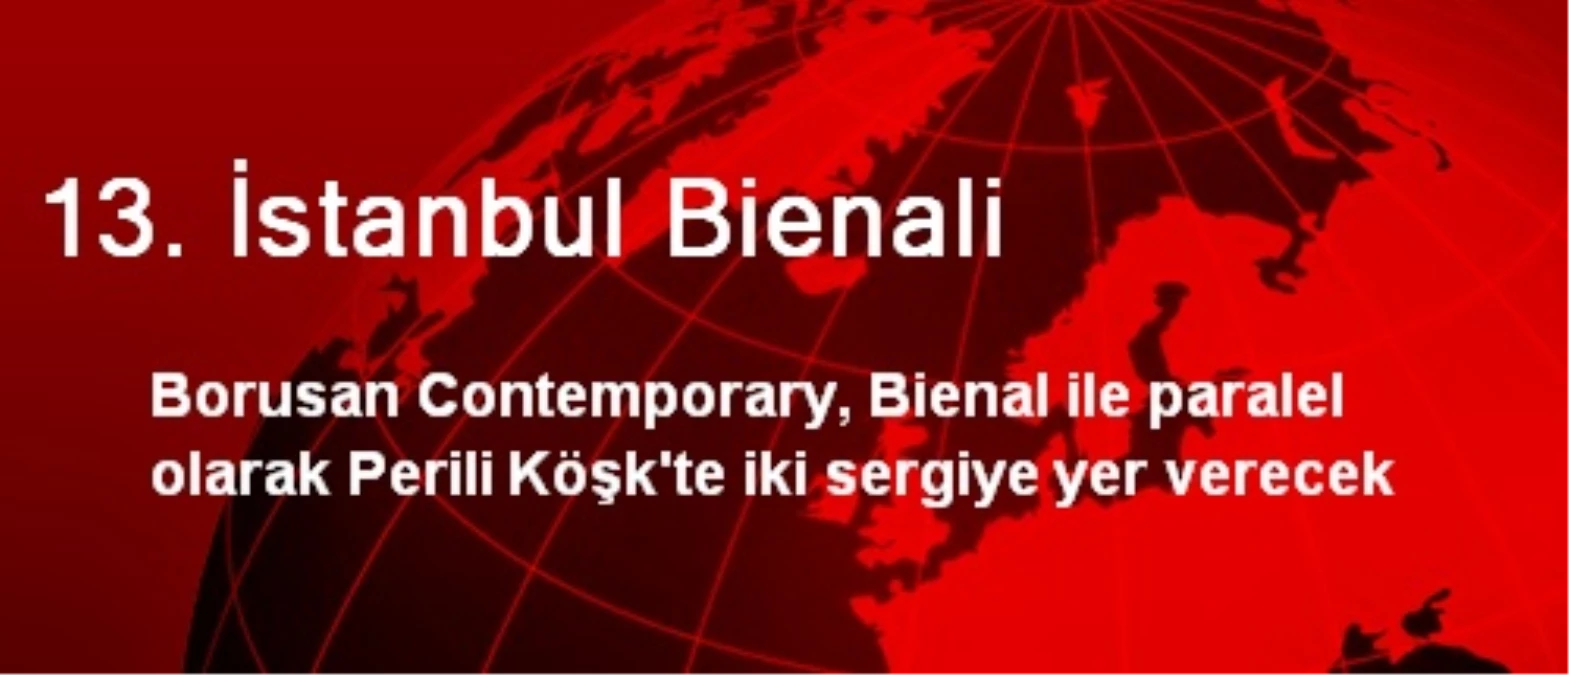 13. İstanbul Bienali